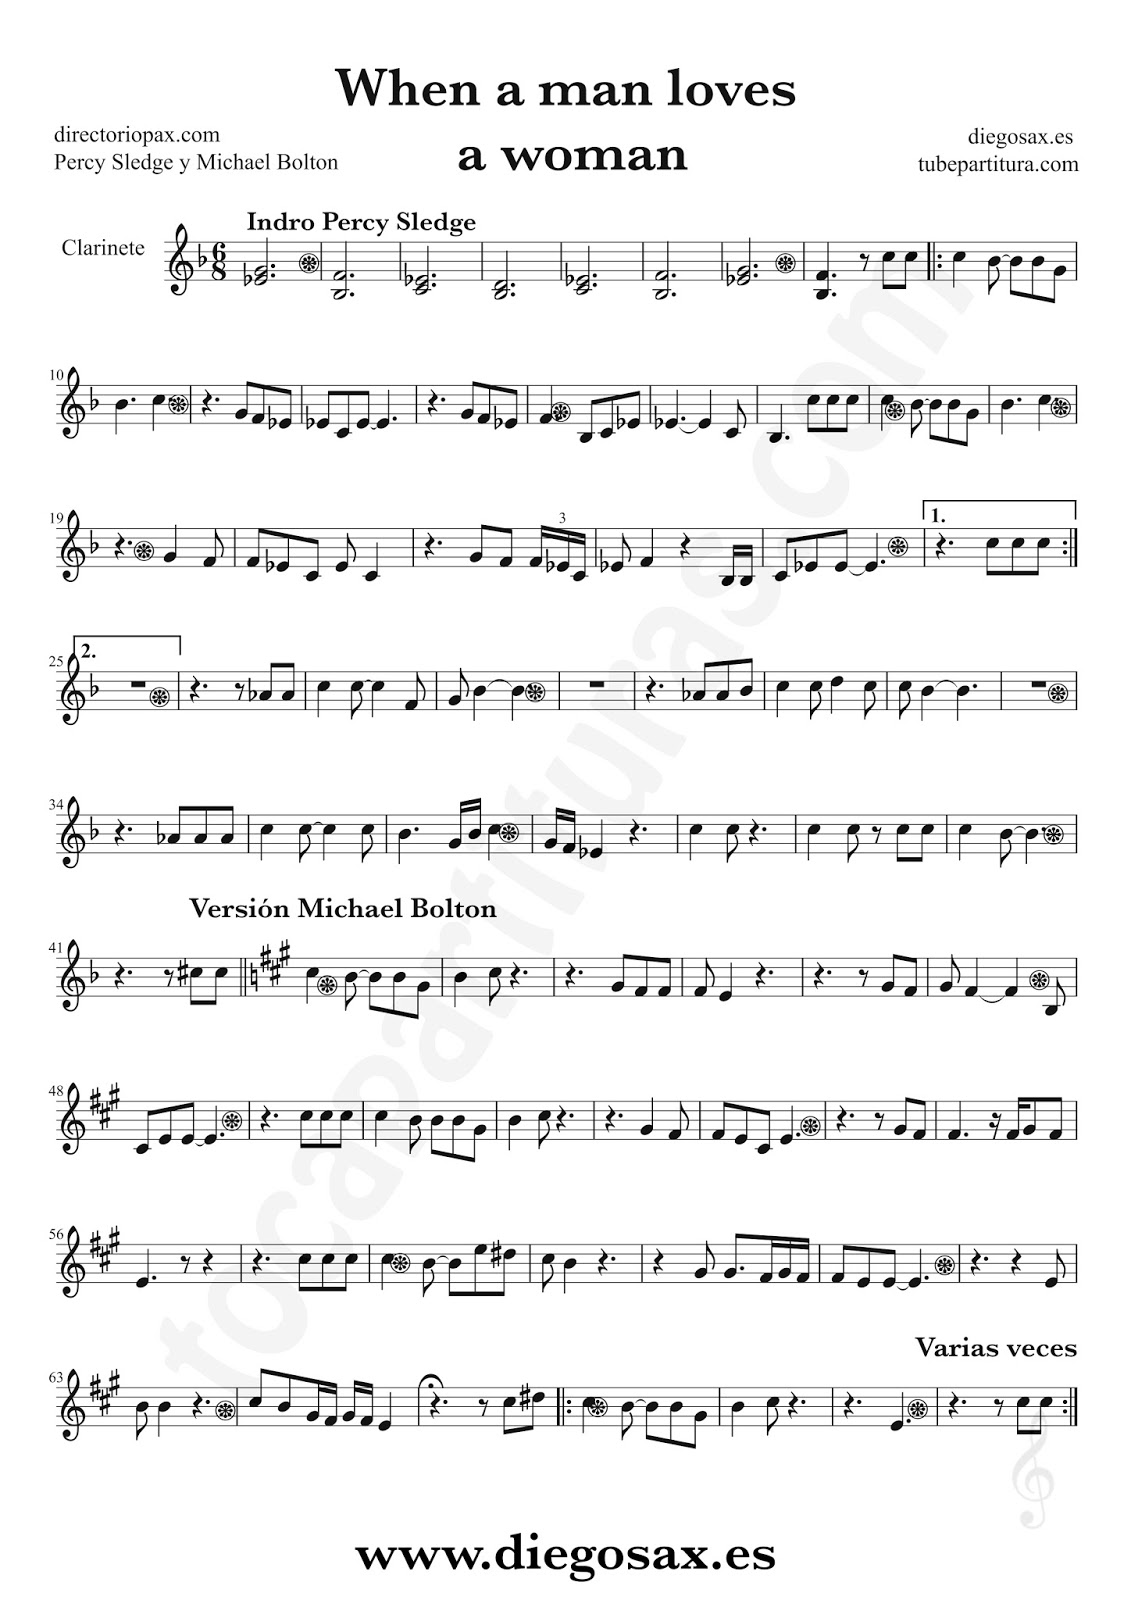 http://2.bp.blogspot.com/-slr7iqfCWHQ/UhXdIxTY9WI/AAAAAAAAE_U/07tbxYp_vLE/s1600/Clarinet+Sheet+Music+When+a+man+loves+a+woman+Clarinete+Partitura+Percy+Sledge+y+Michael+Bolton+Music+Score-1.JPG